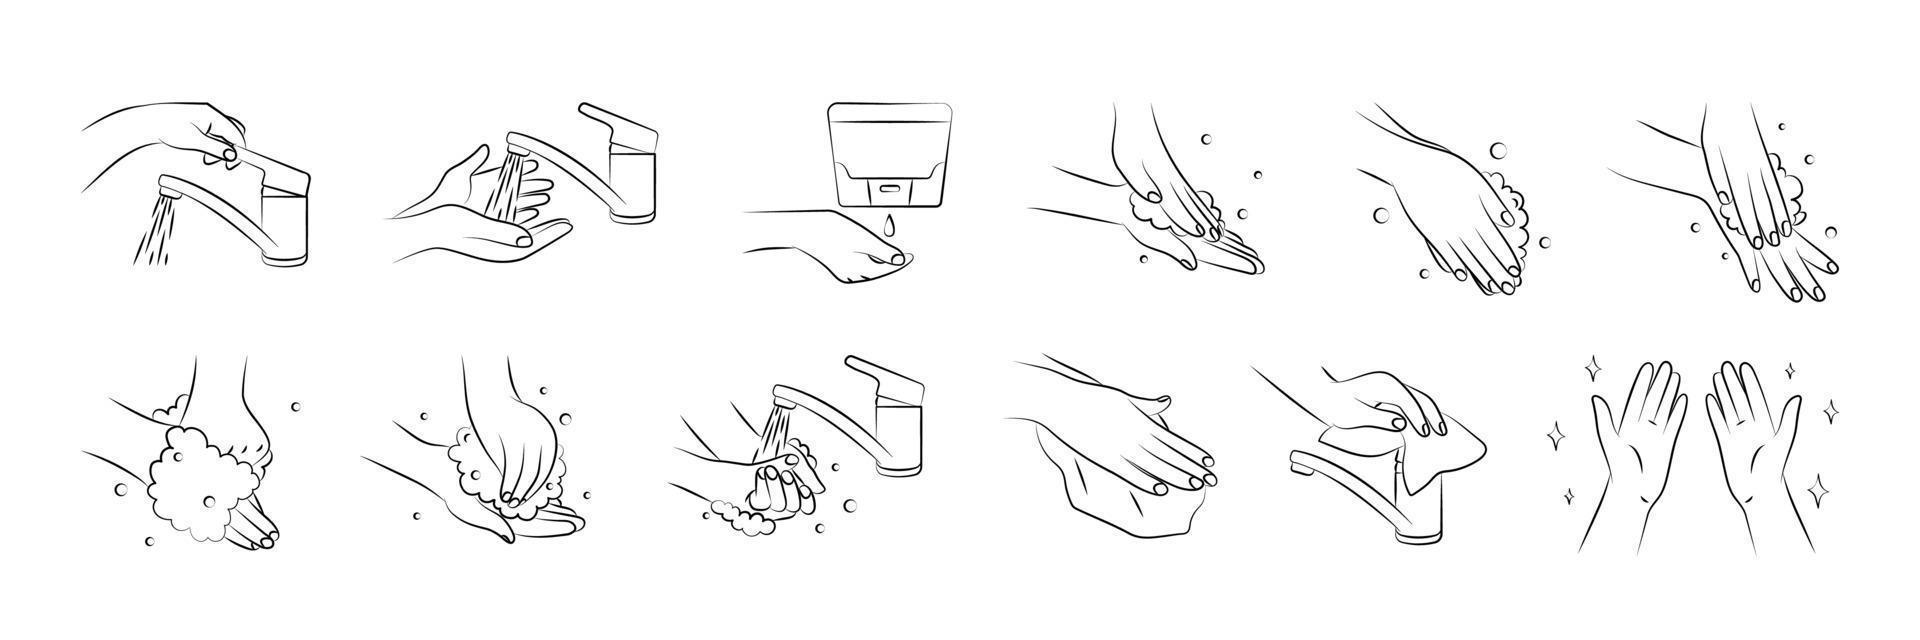 Handwaschset vektor